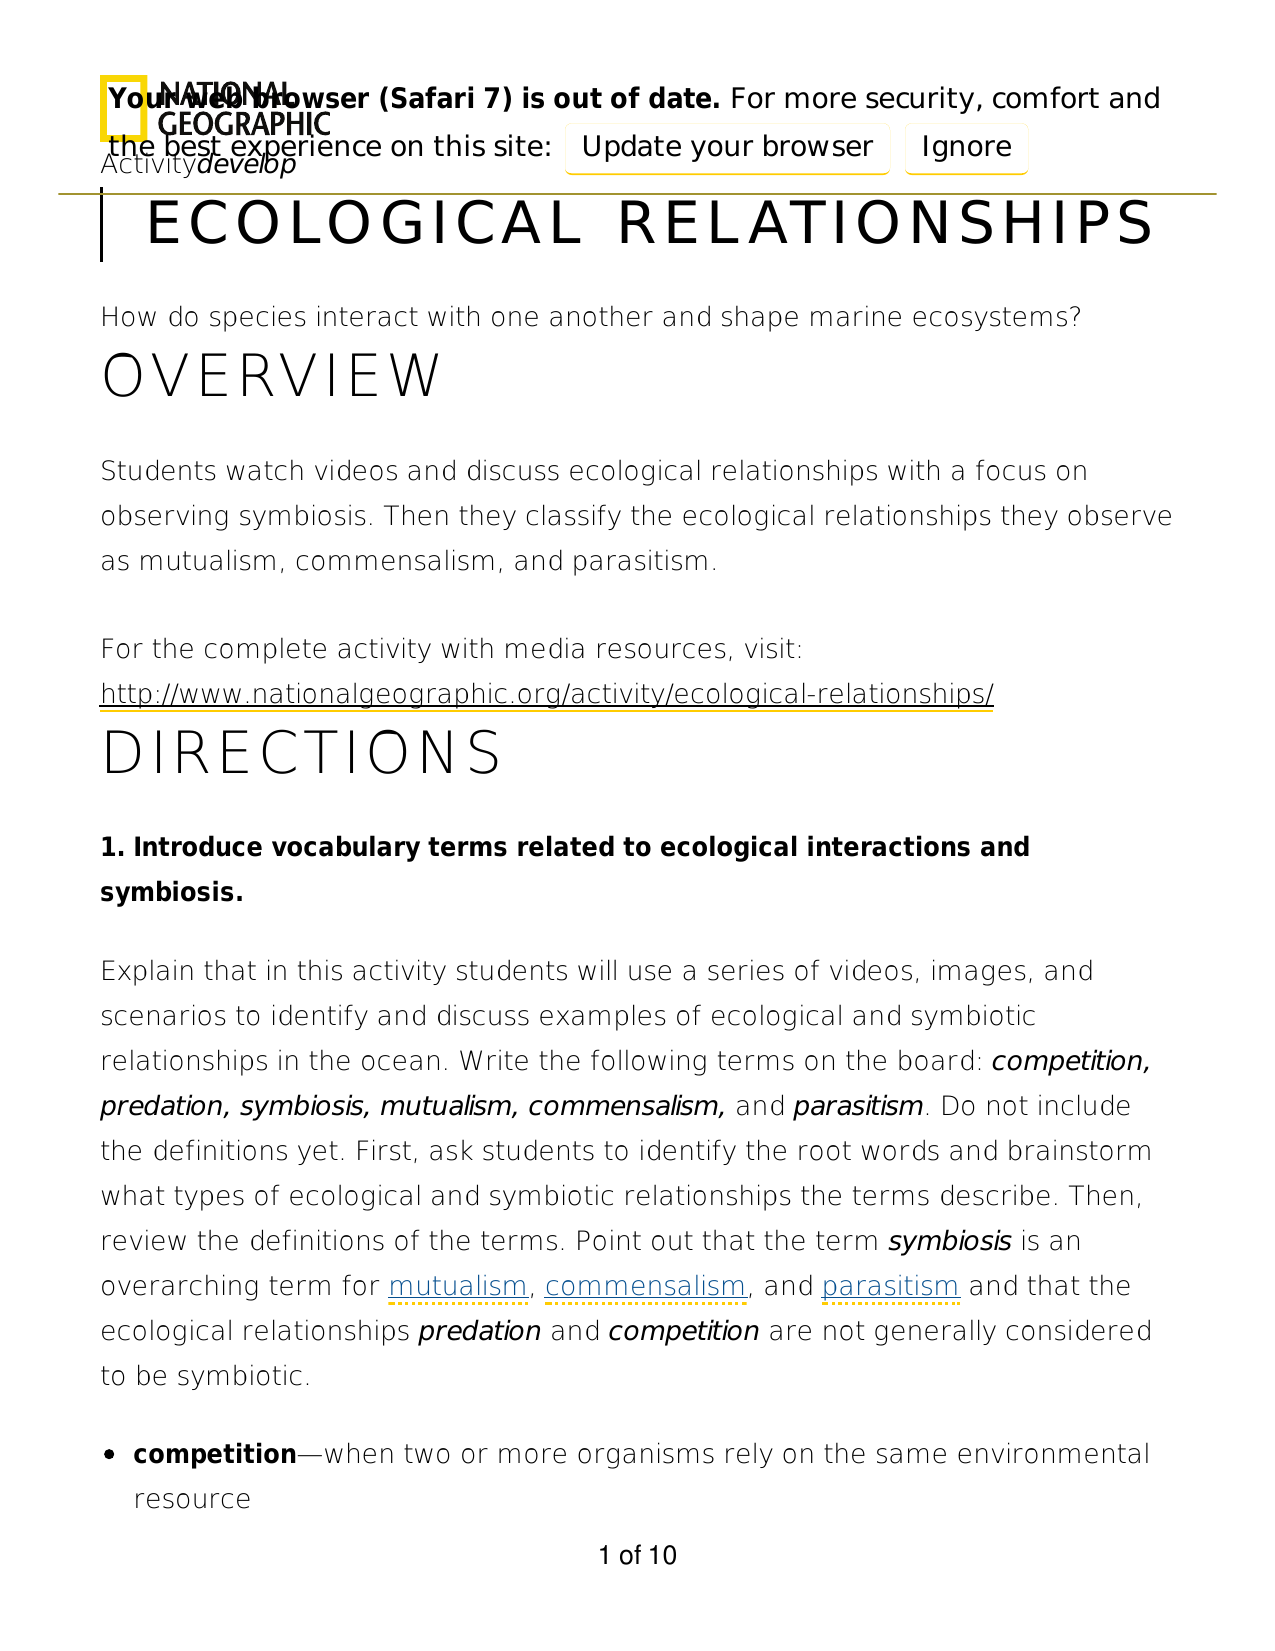 ecological-relationships-20 Inside Ecological Relationships Worksheet Answers